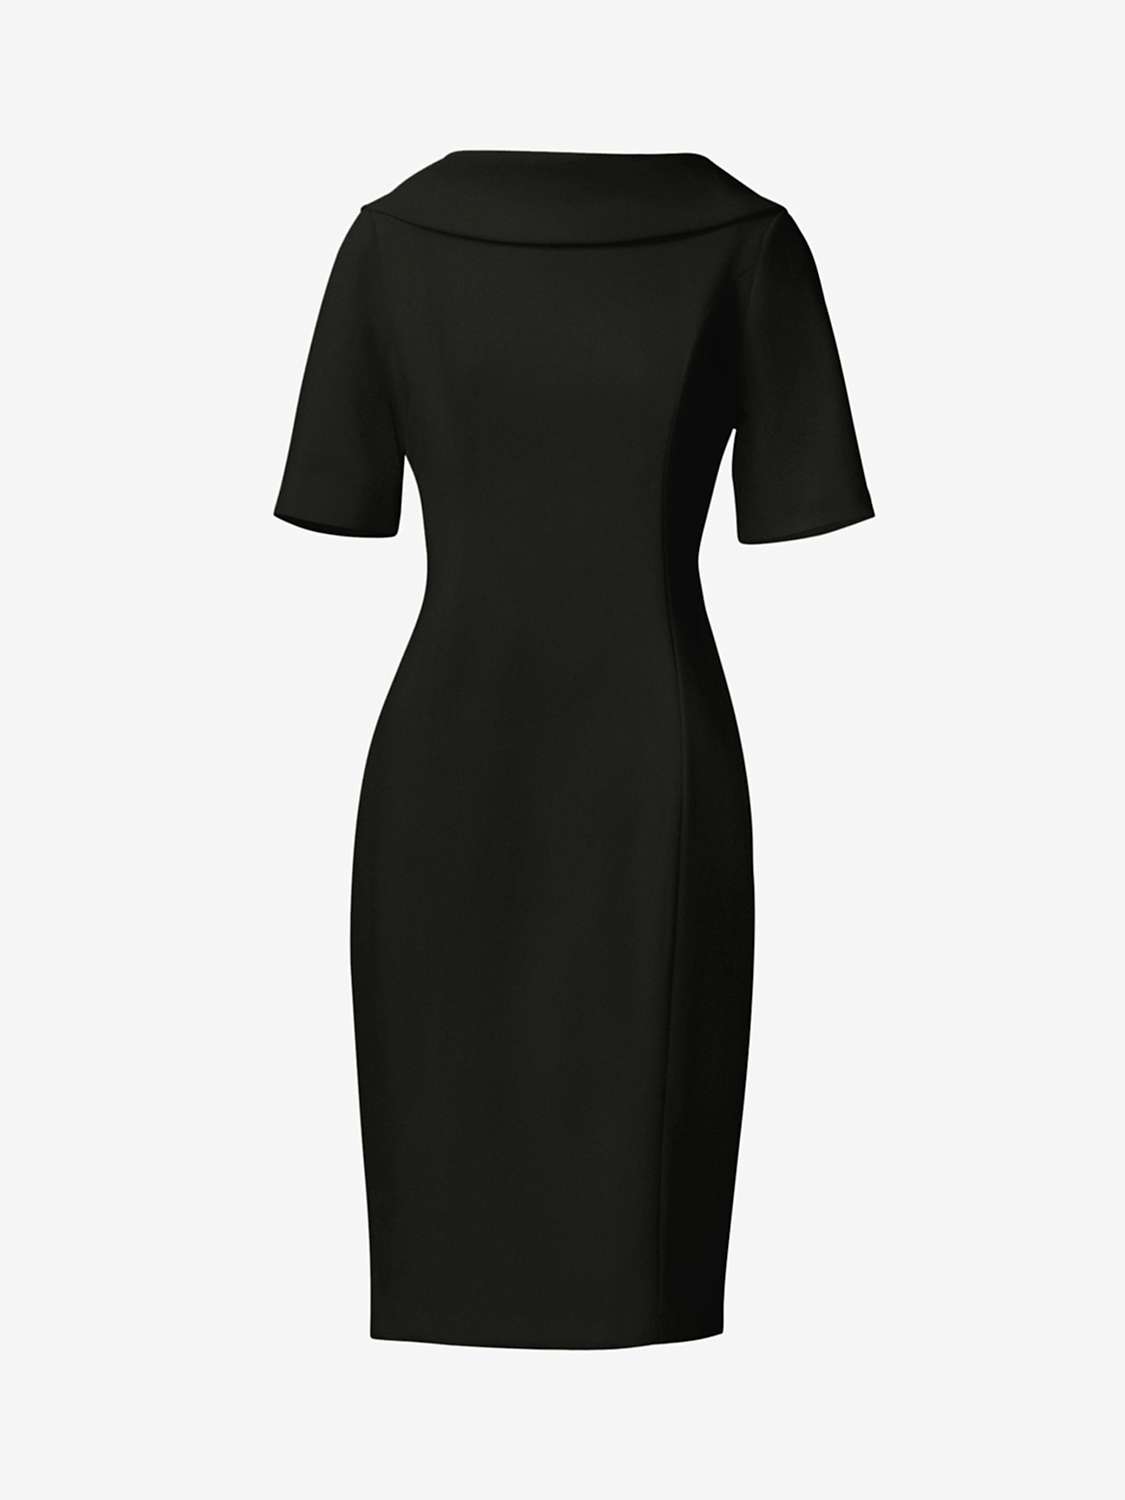 Buy Adrianna Papell Roll Neck Sheath Knee Length Dress Online at johnlewis.com